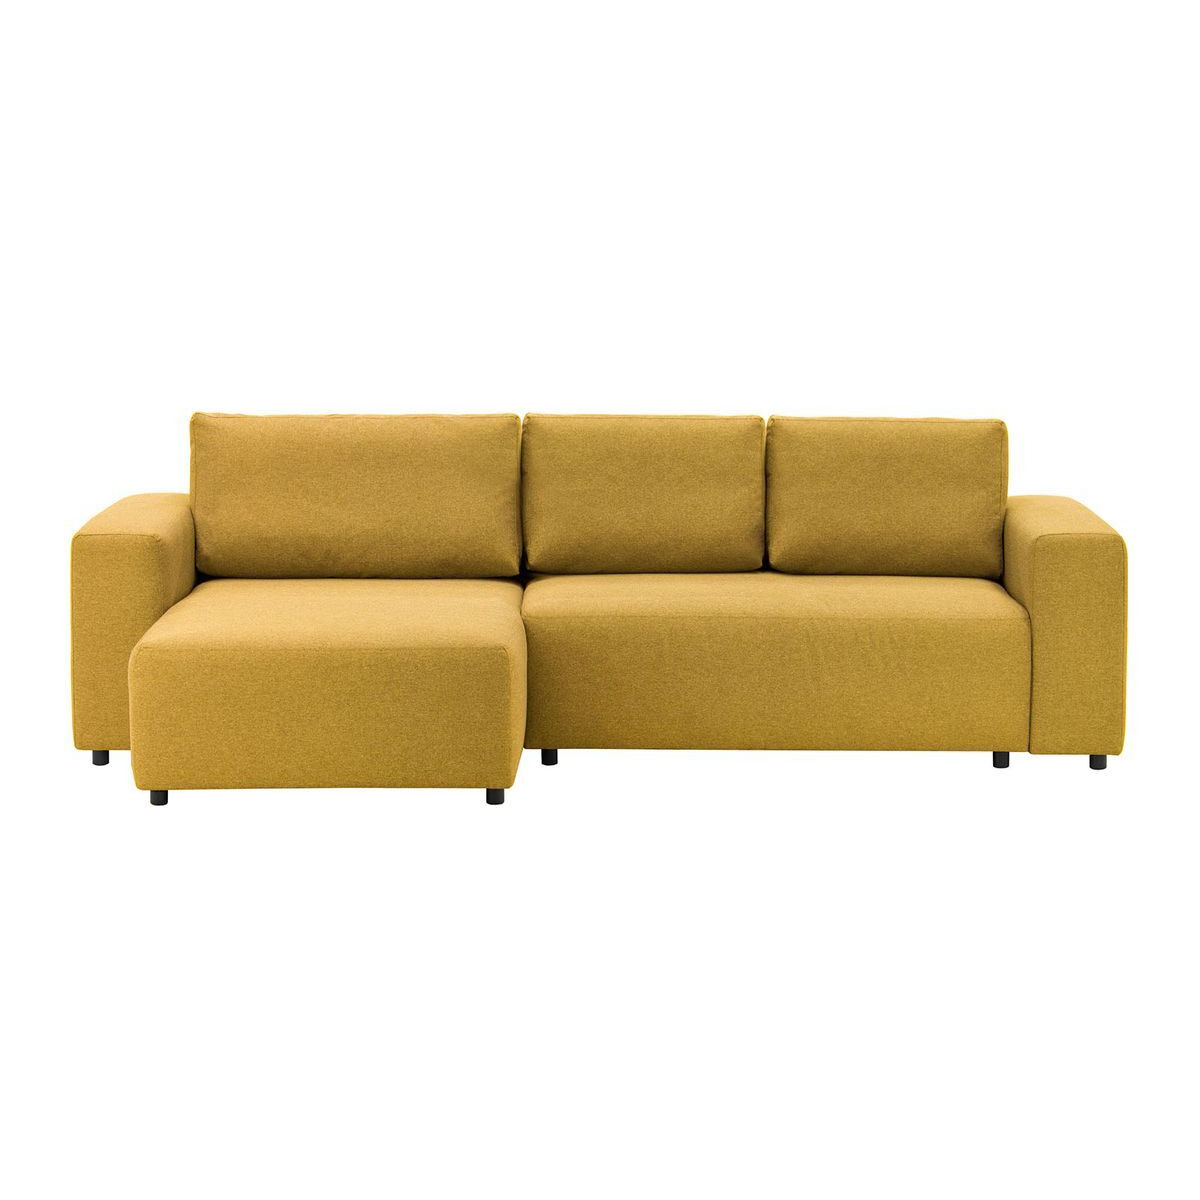 Solace Left Hand Corner Sofa Bed, mustard - image 1